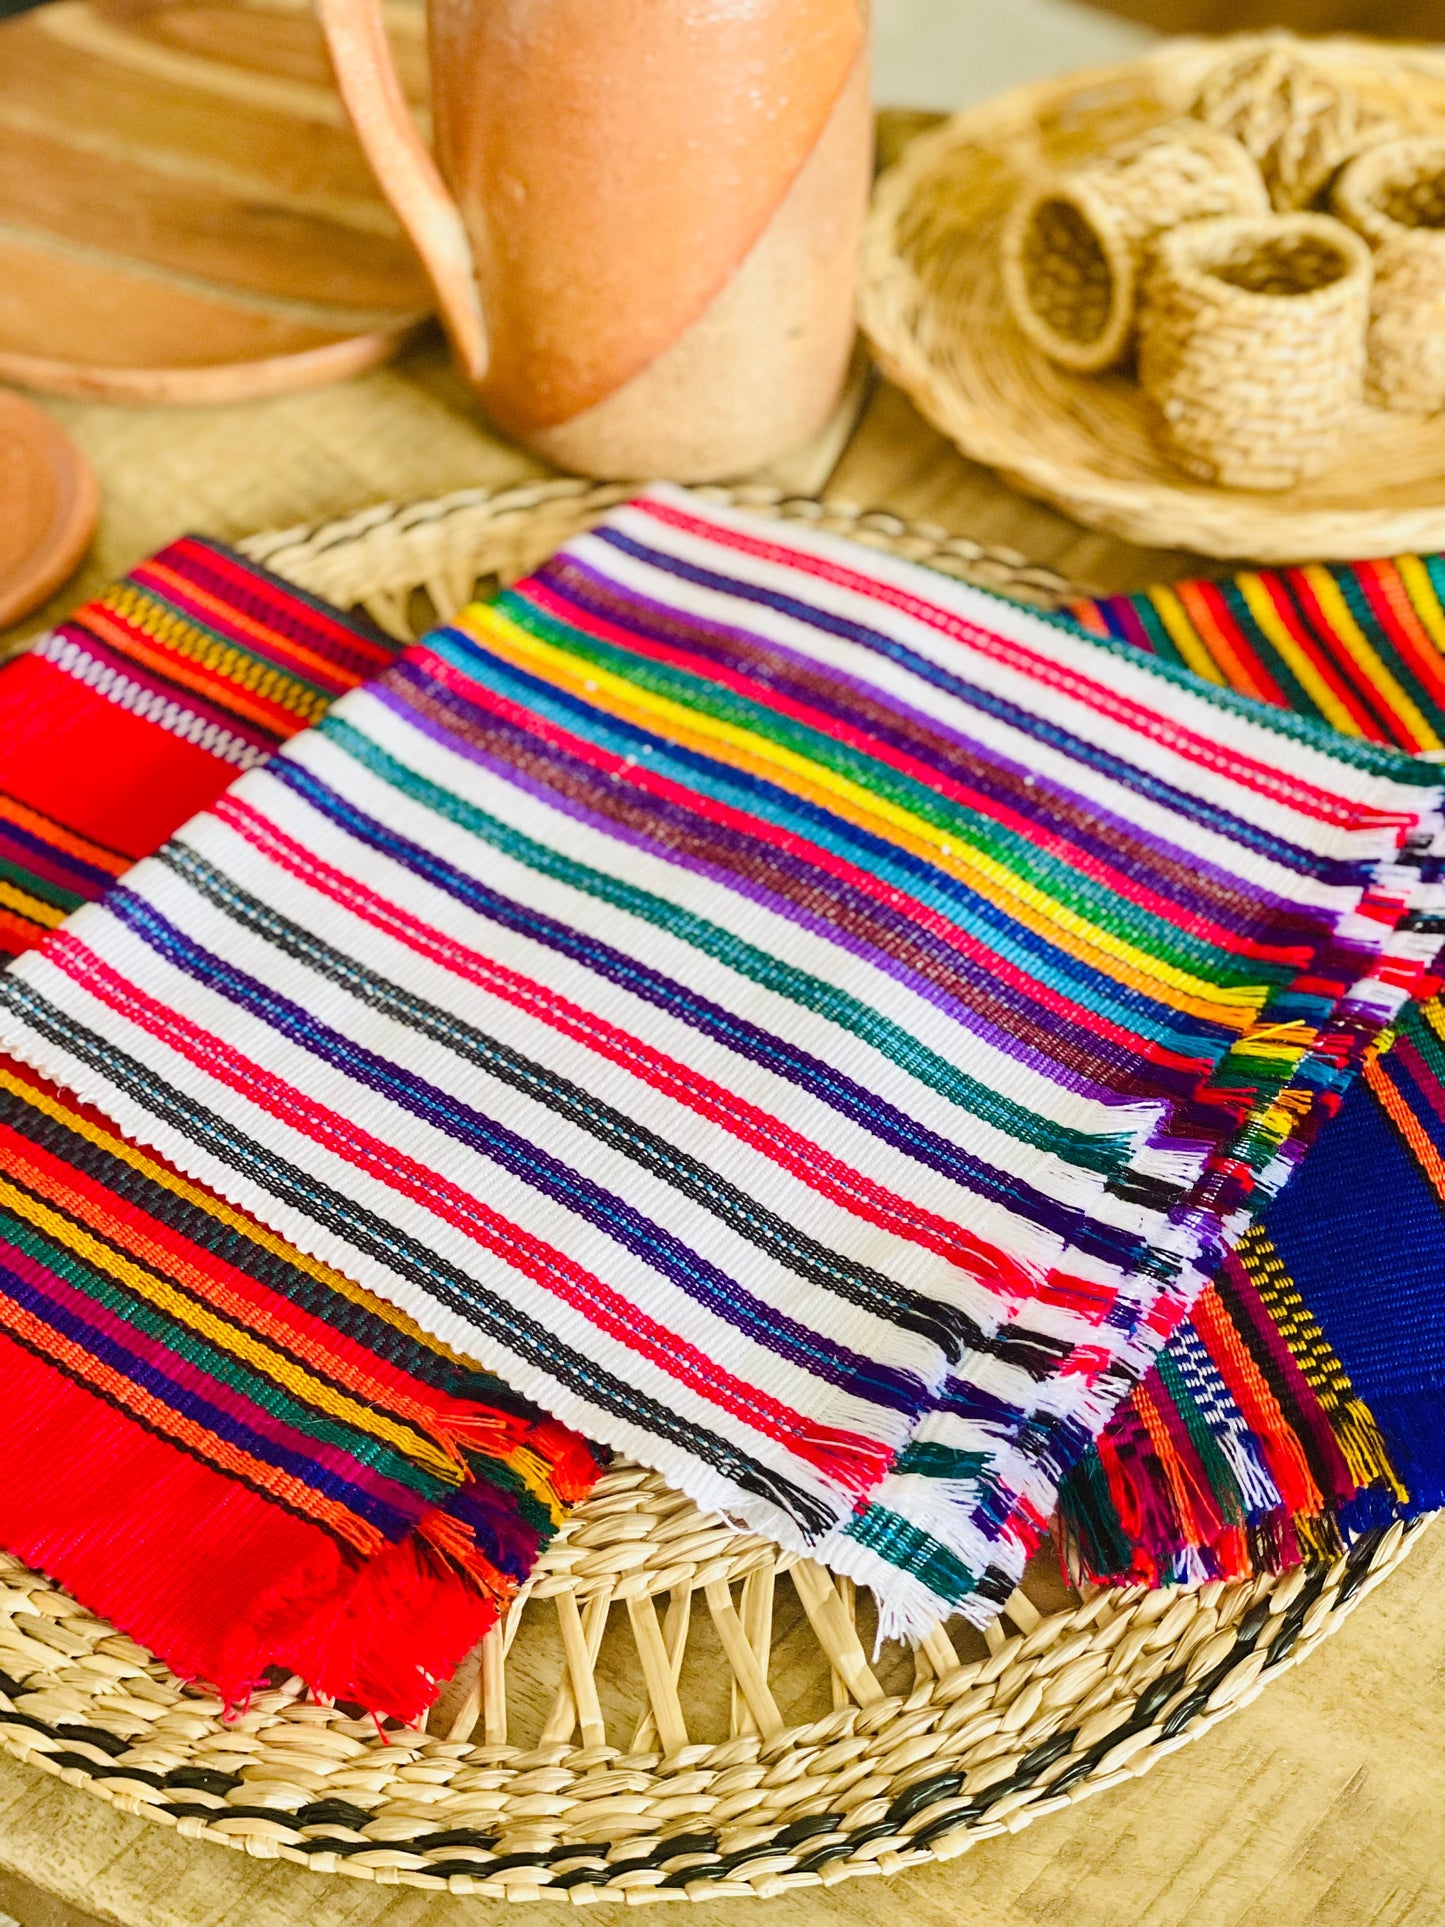 Handwoven tortilla wraps/bread cloth